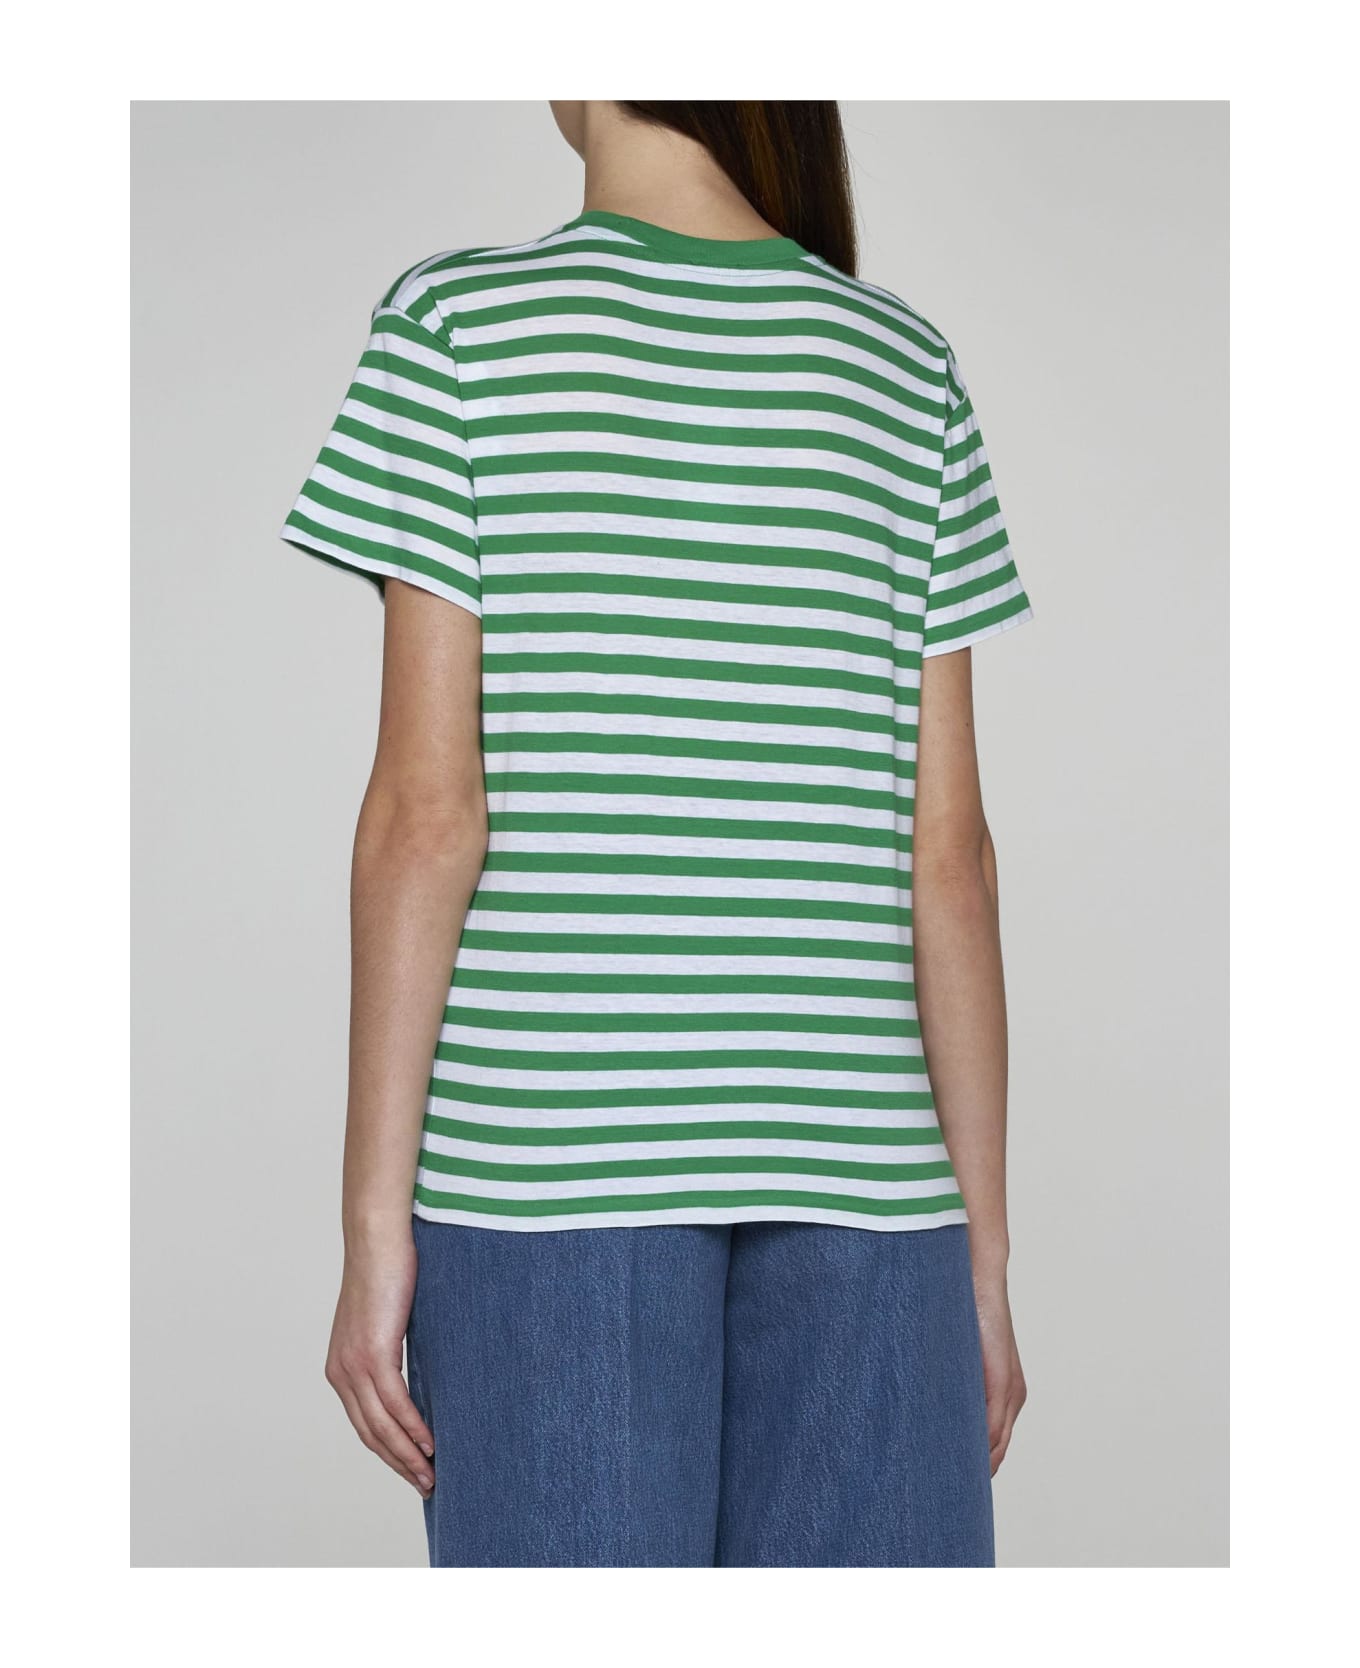 Polo Ralph Lauren Striped Cotton T-shirt - Verde